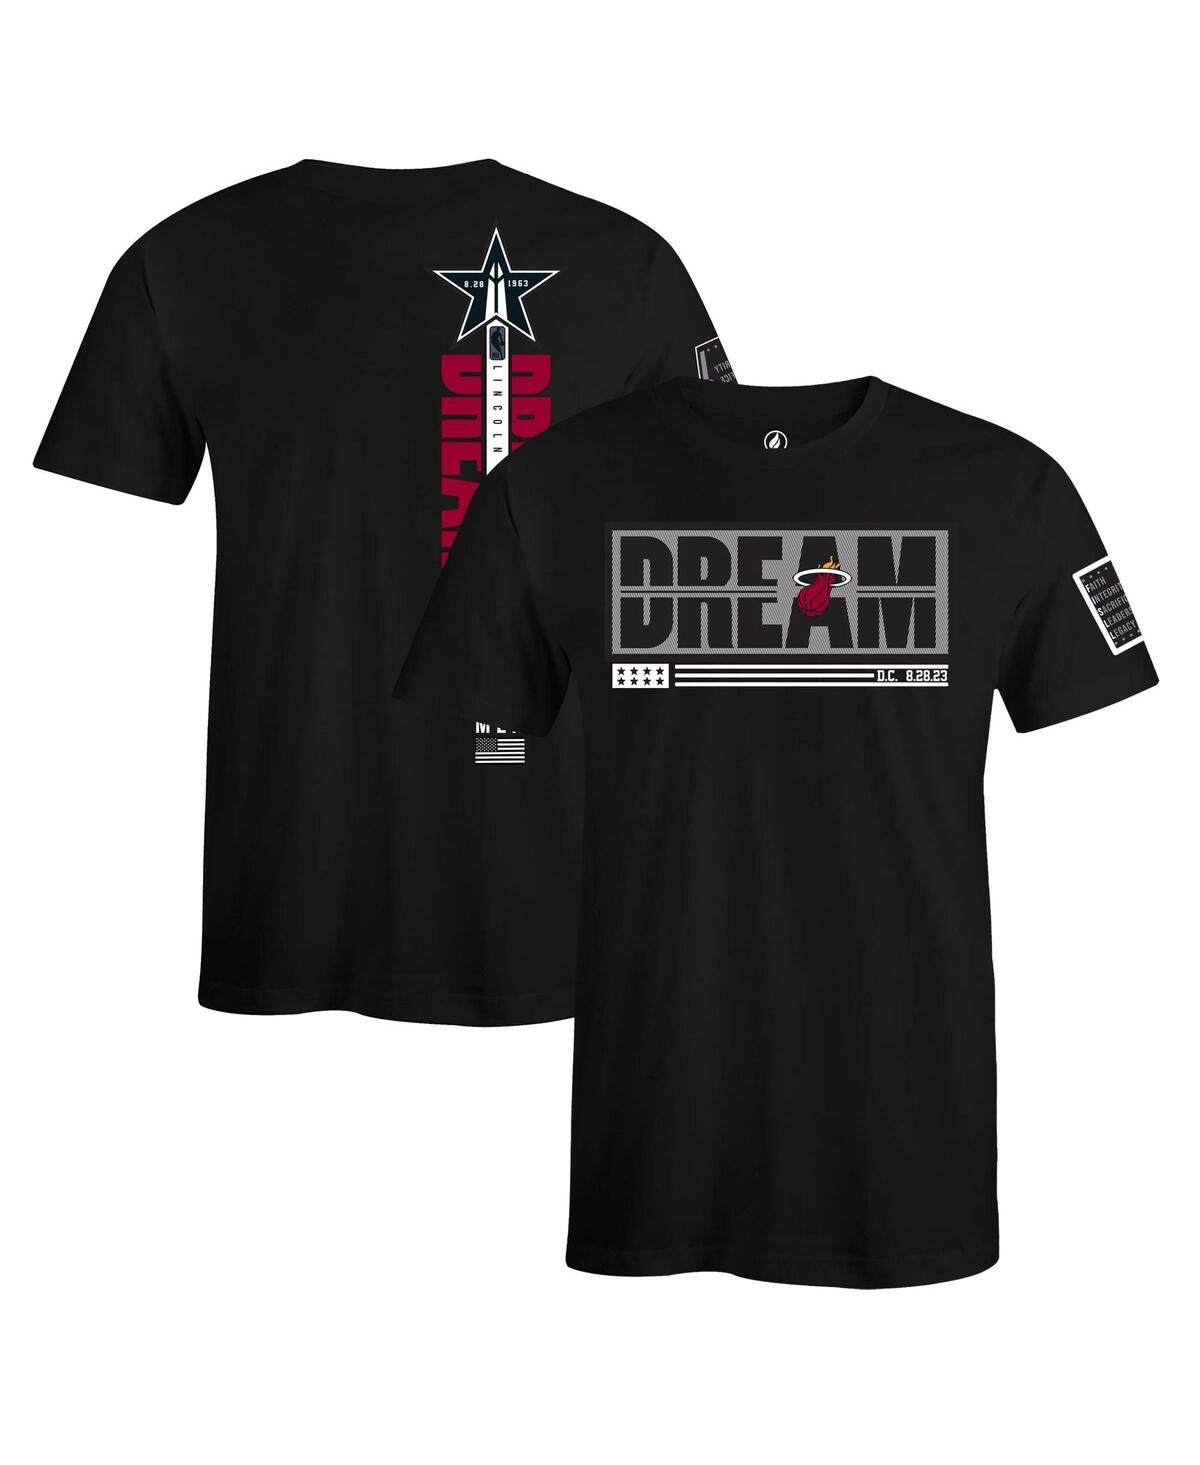 Men's and Women's Fisll x Black History Collection Black Miami Heat T-shirt - Black